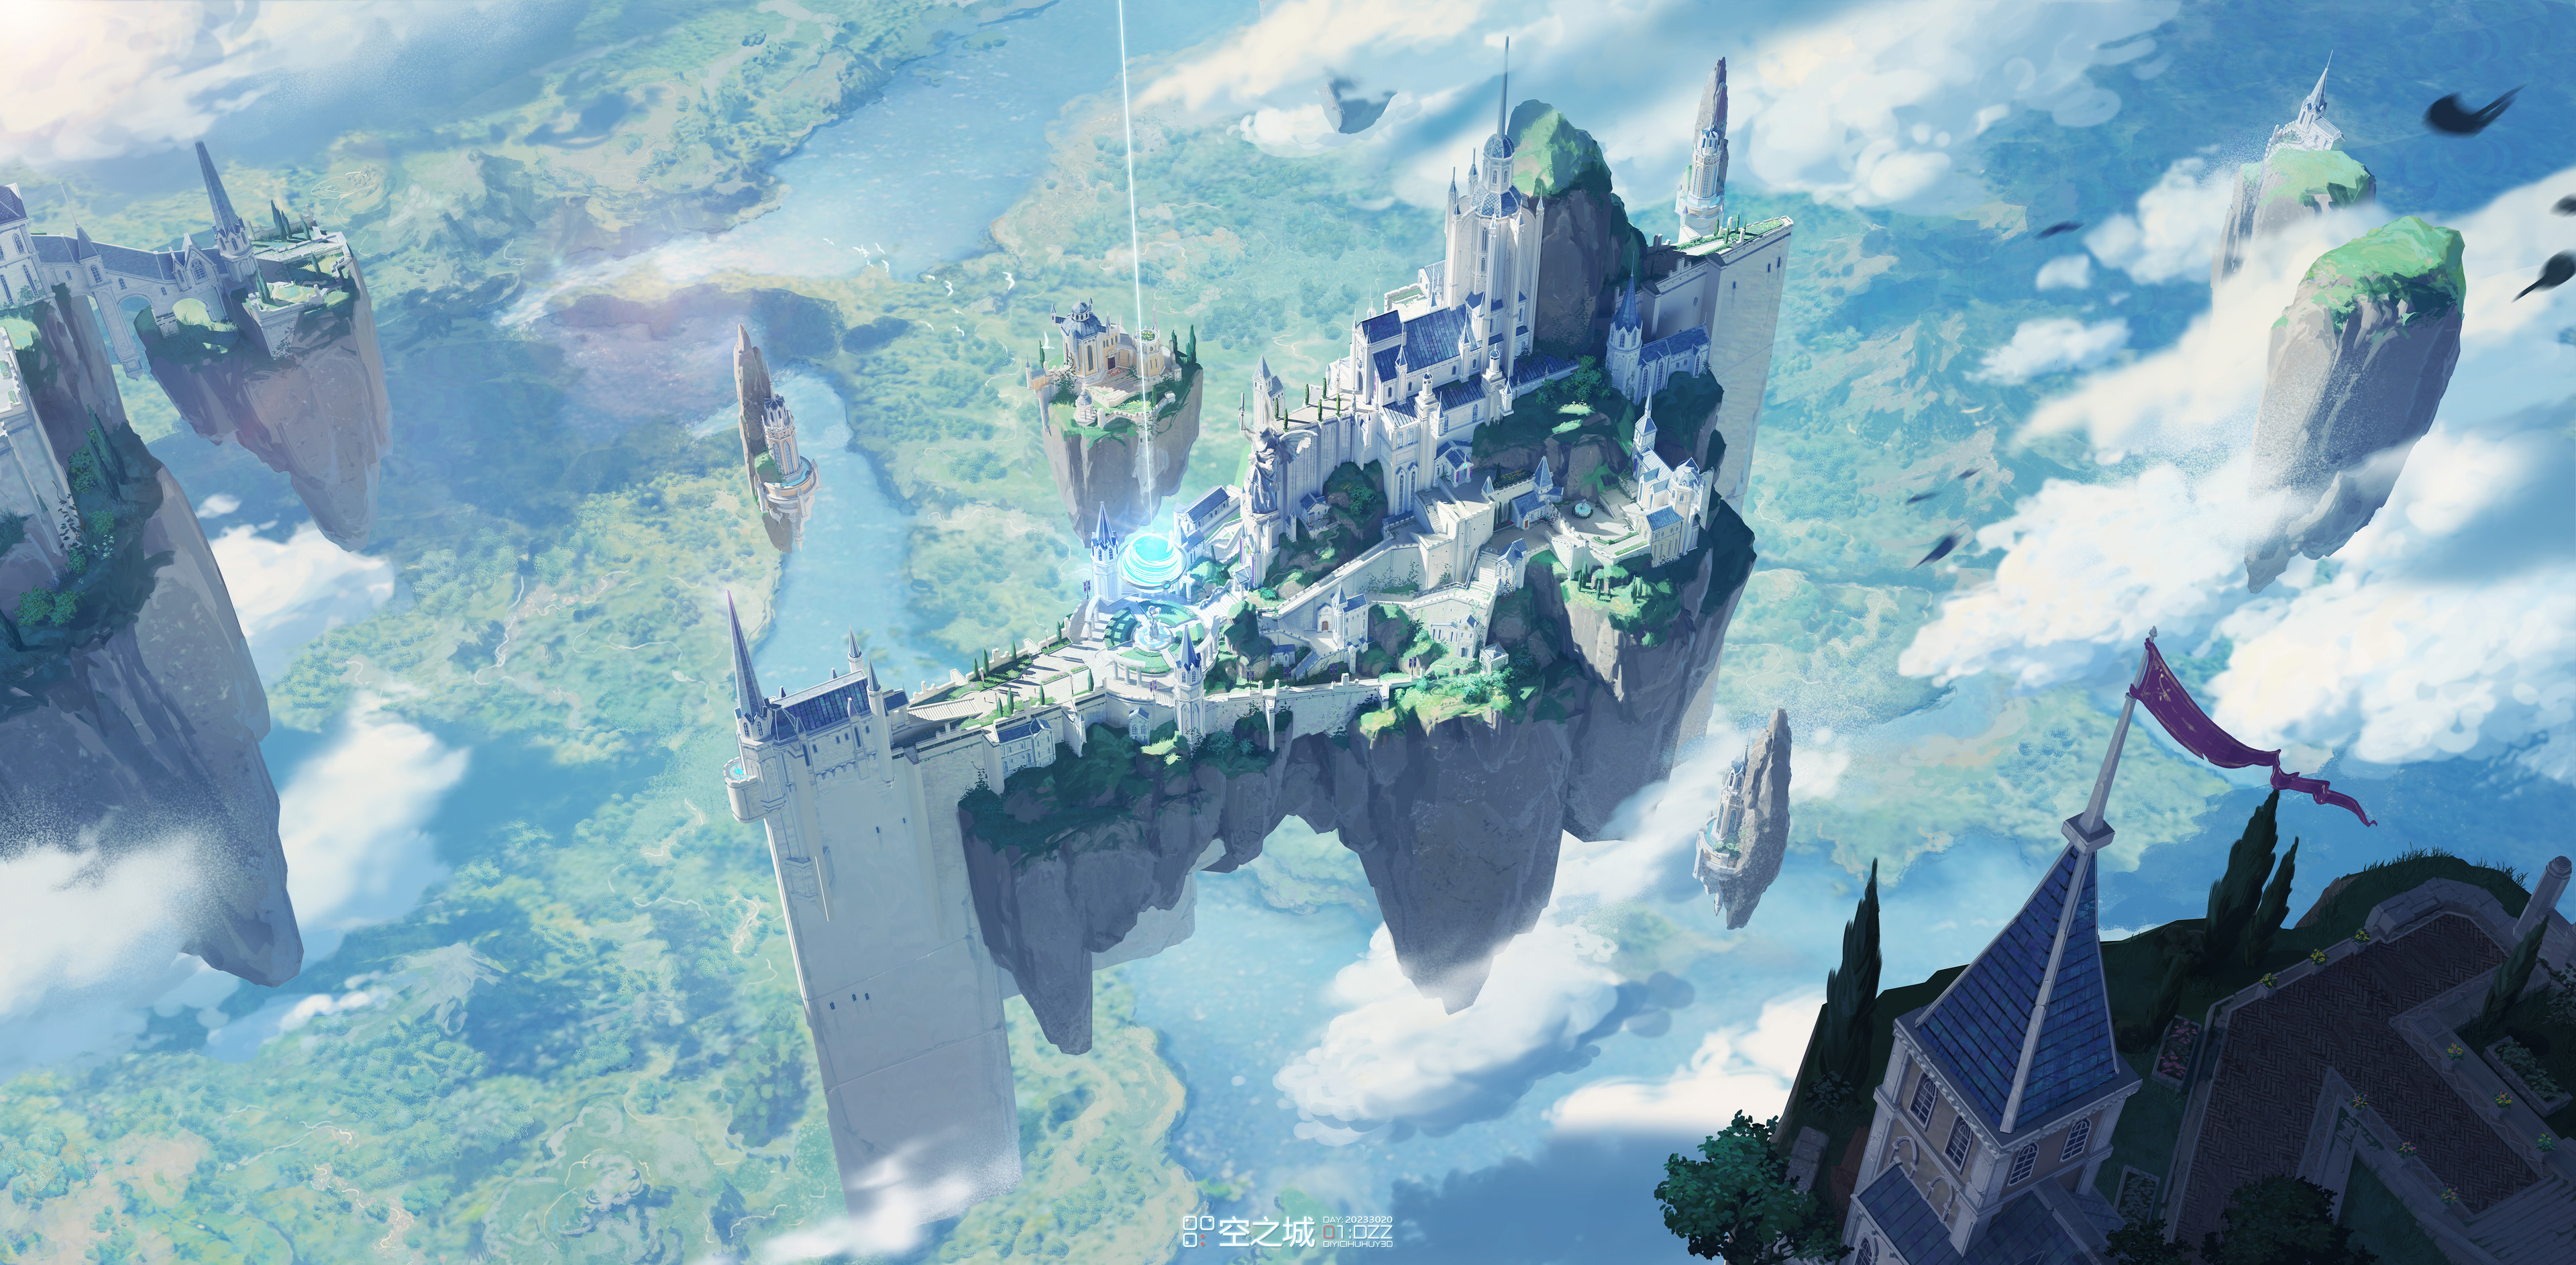 Digital Art Artwork Illustration Landscape Sky Castle Fantasy Art Clouds Watermarked Aerial View Arc 3840x1885